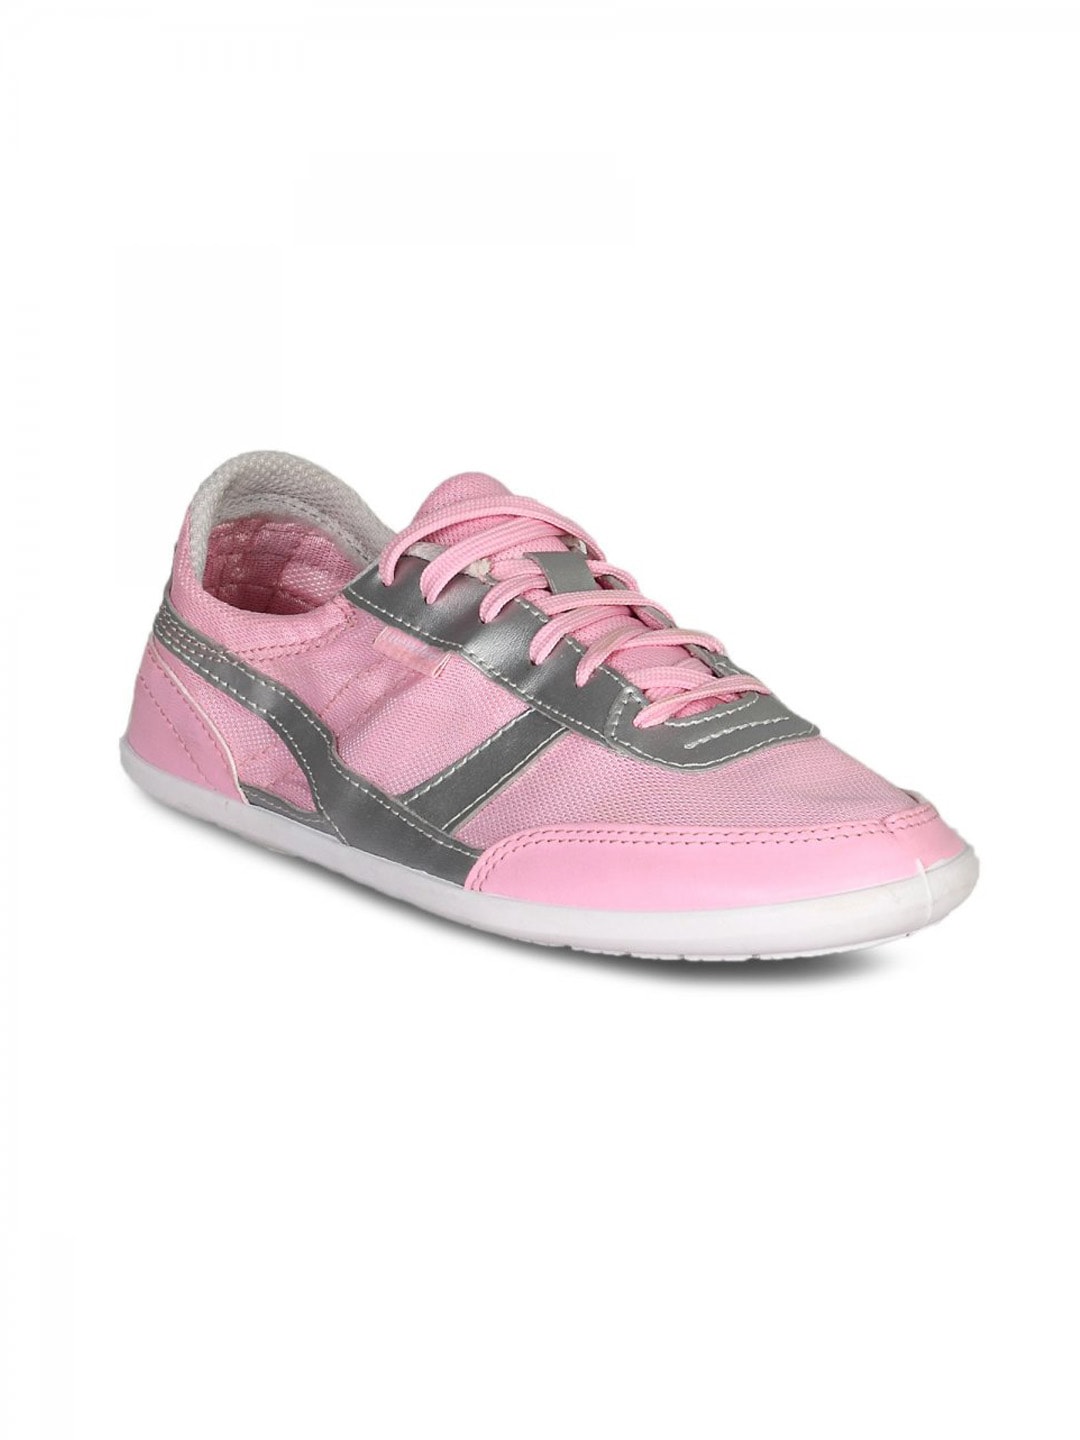 Newfeel Unisex Pink Grey Shoes